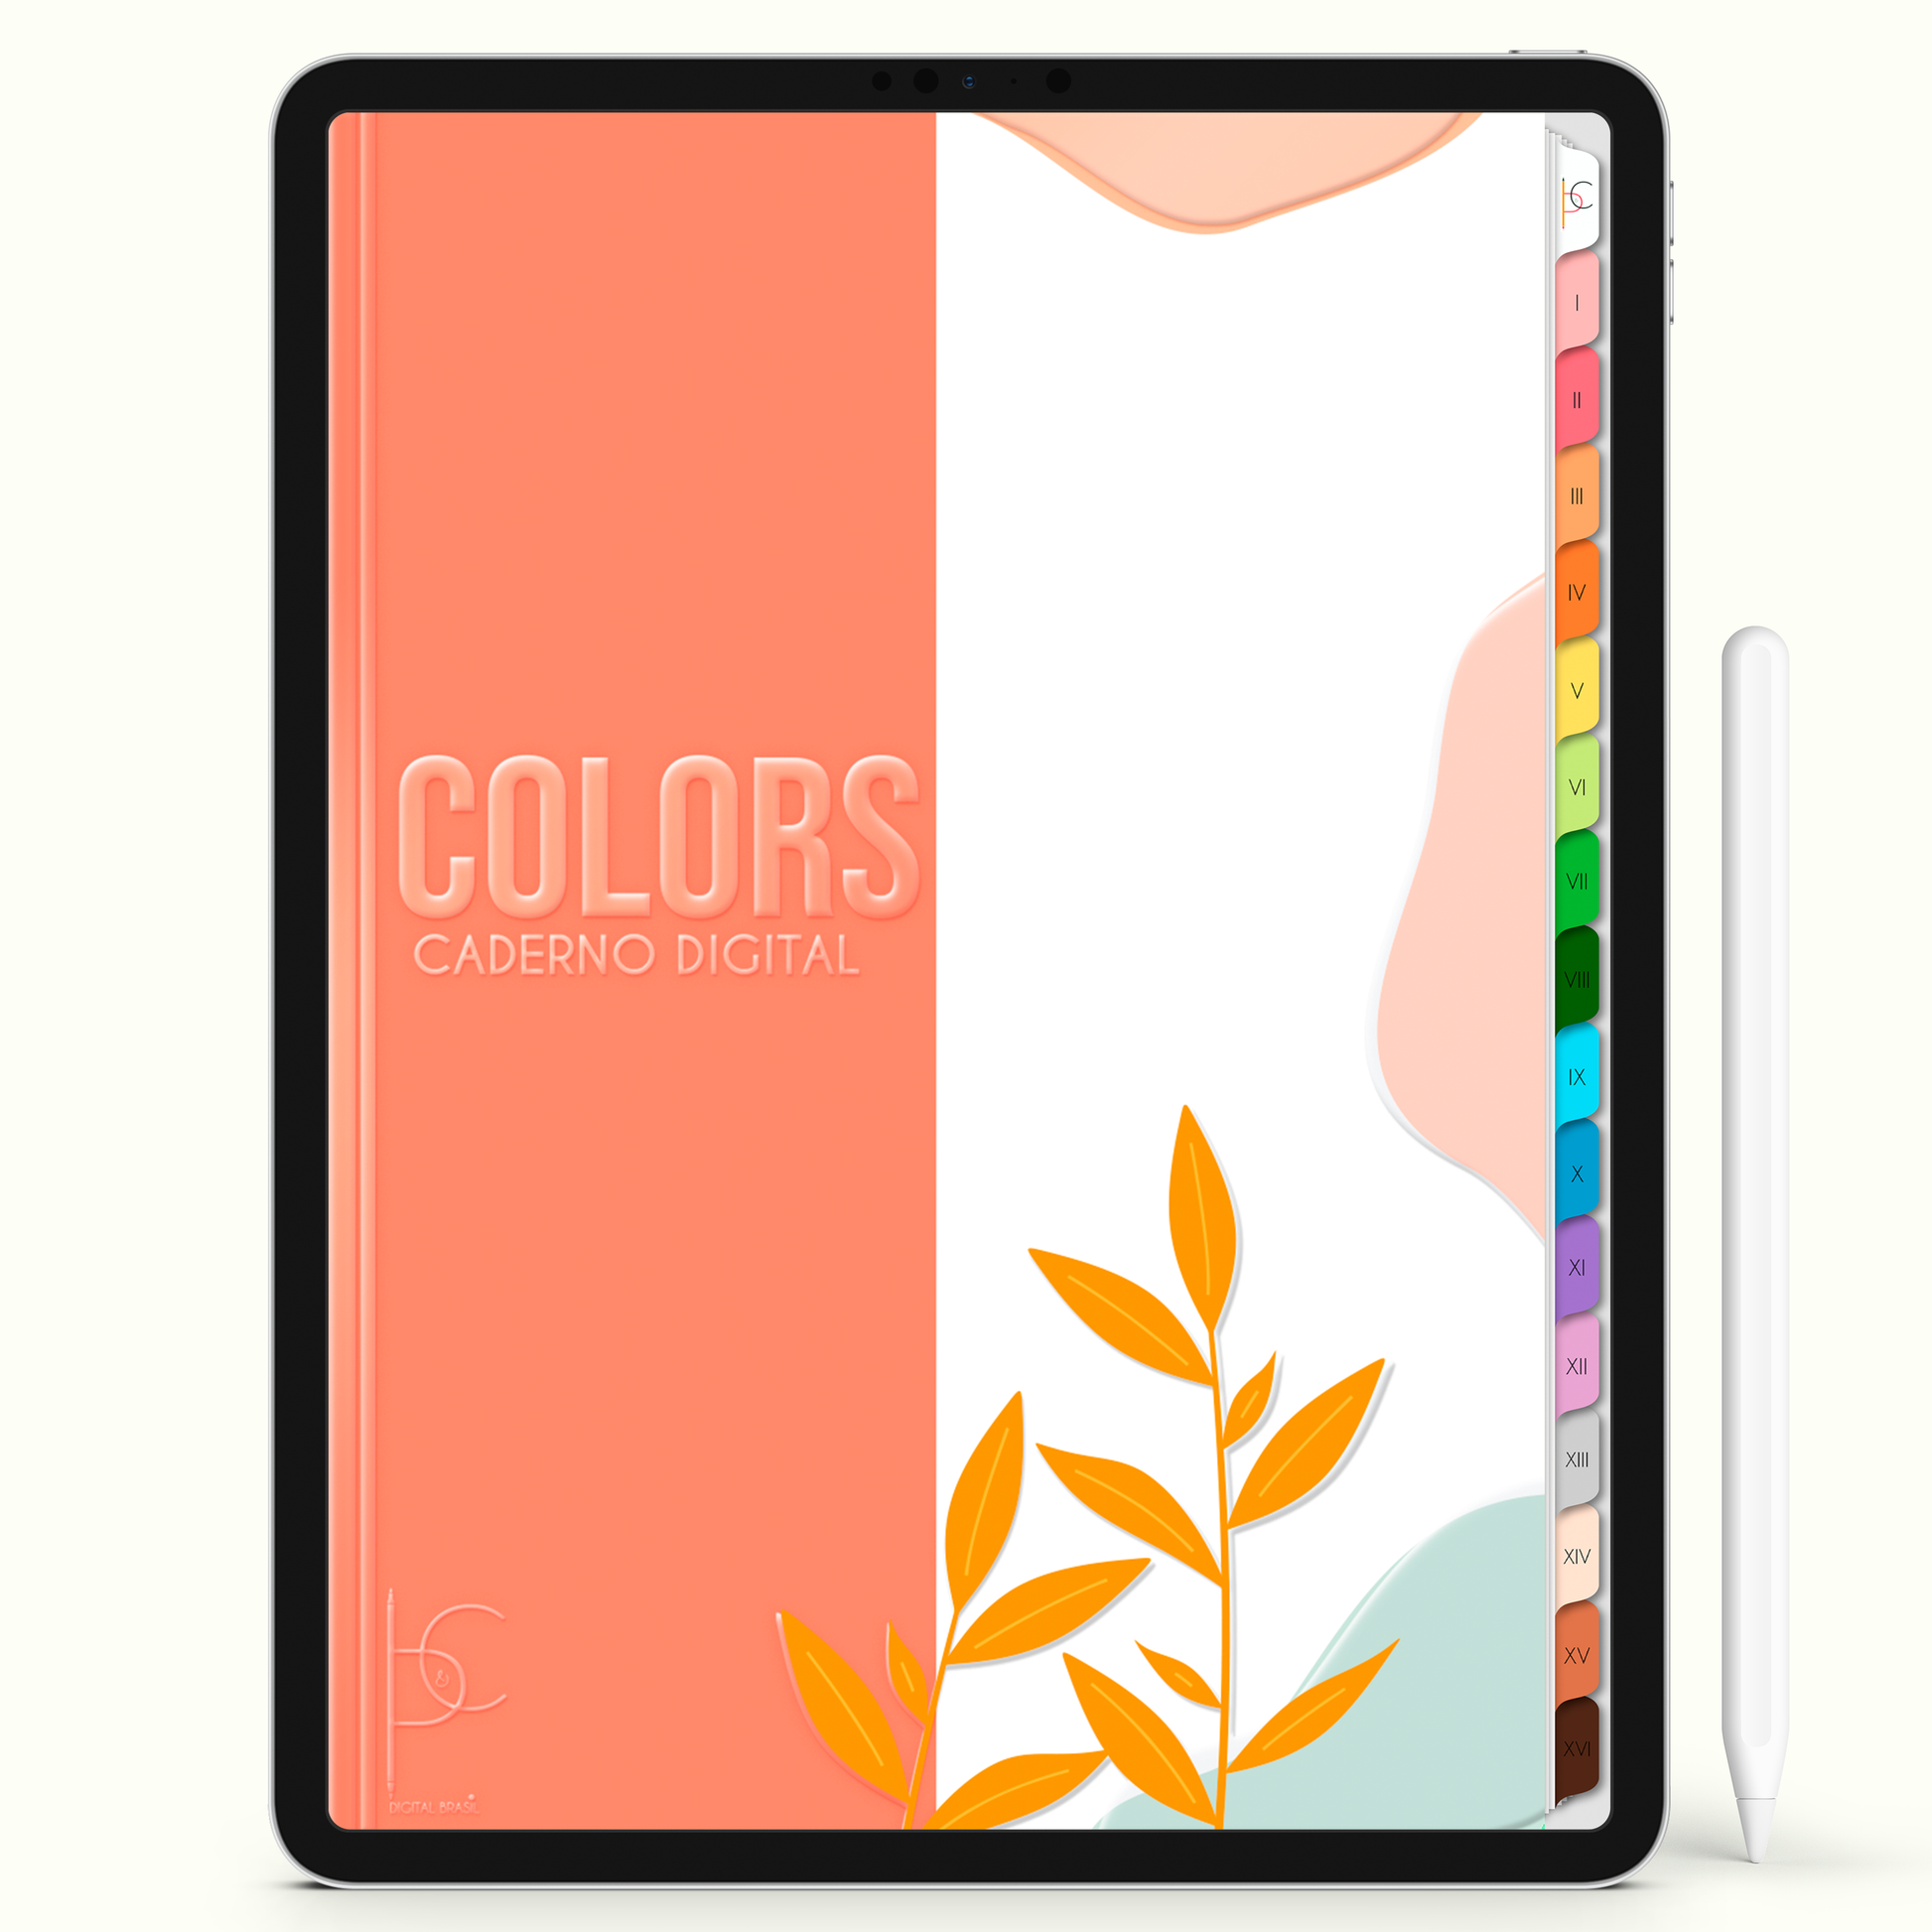 Caderno Digital Colors Bel 16 Matérias • Para iPad e Tablet Android • Download instantâneo • Sustentável